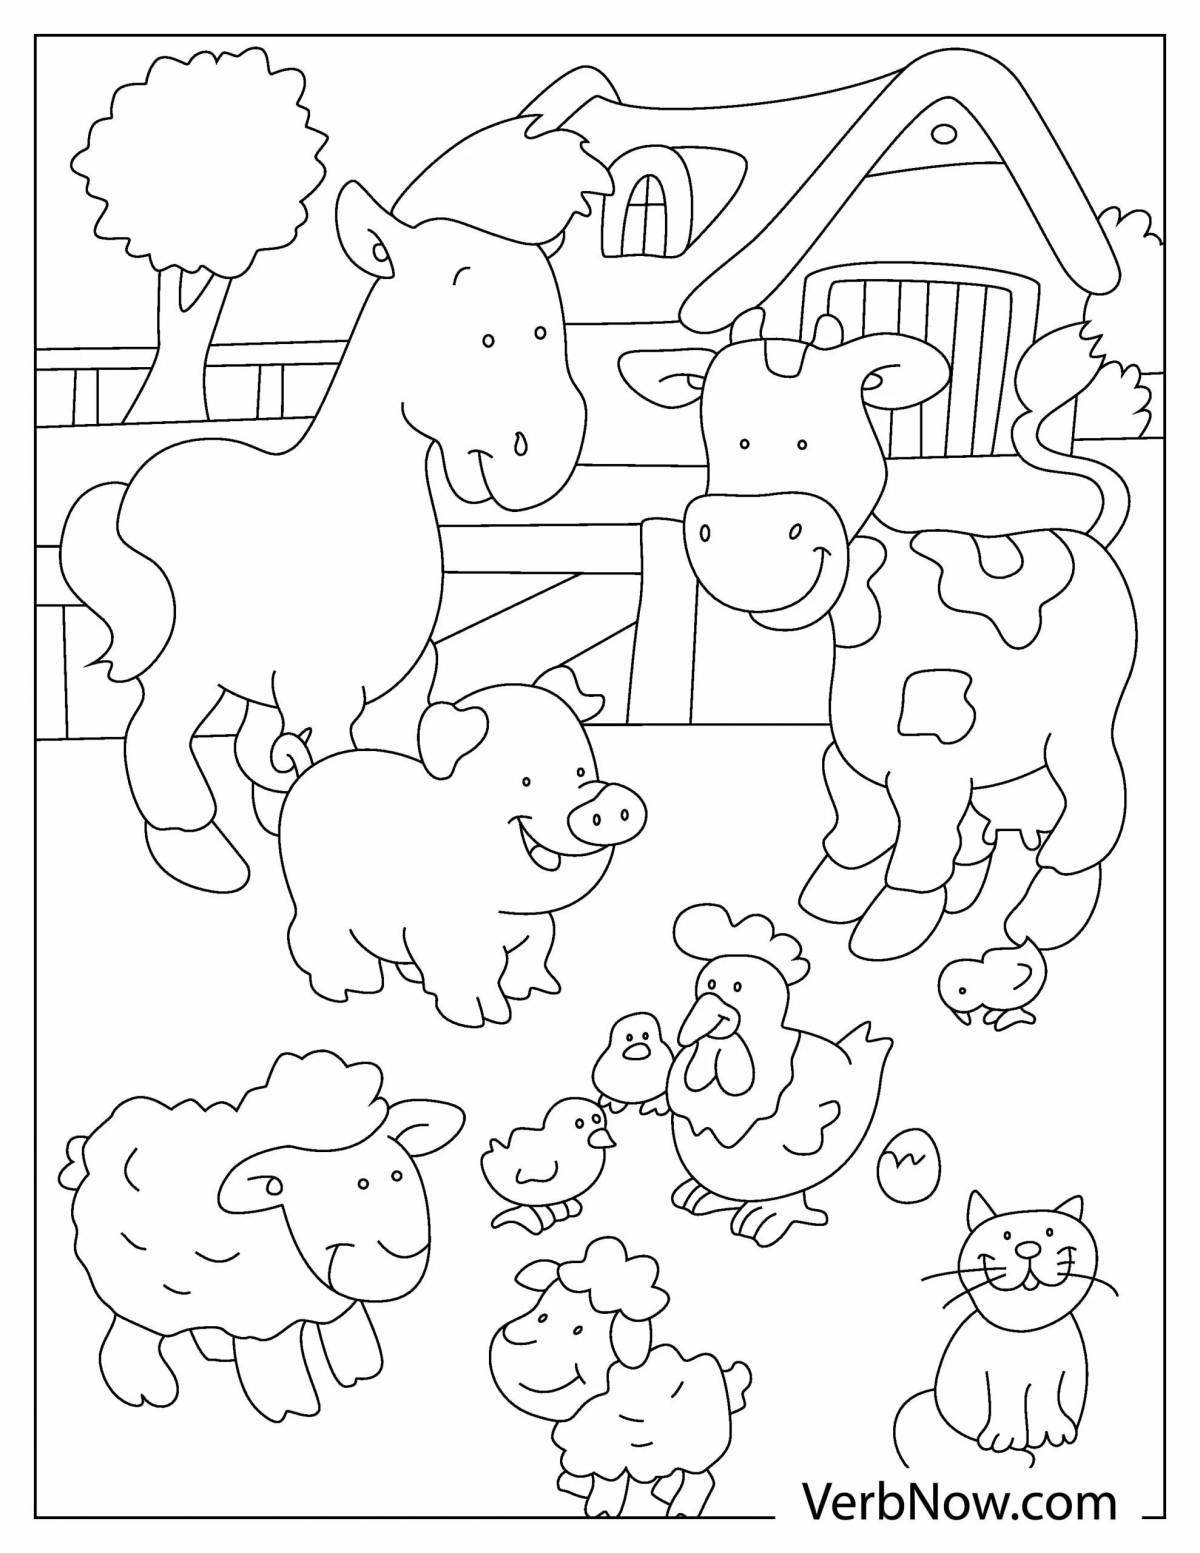 Coloring page joyful sheep